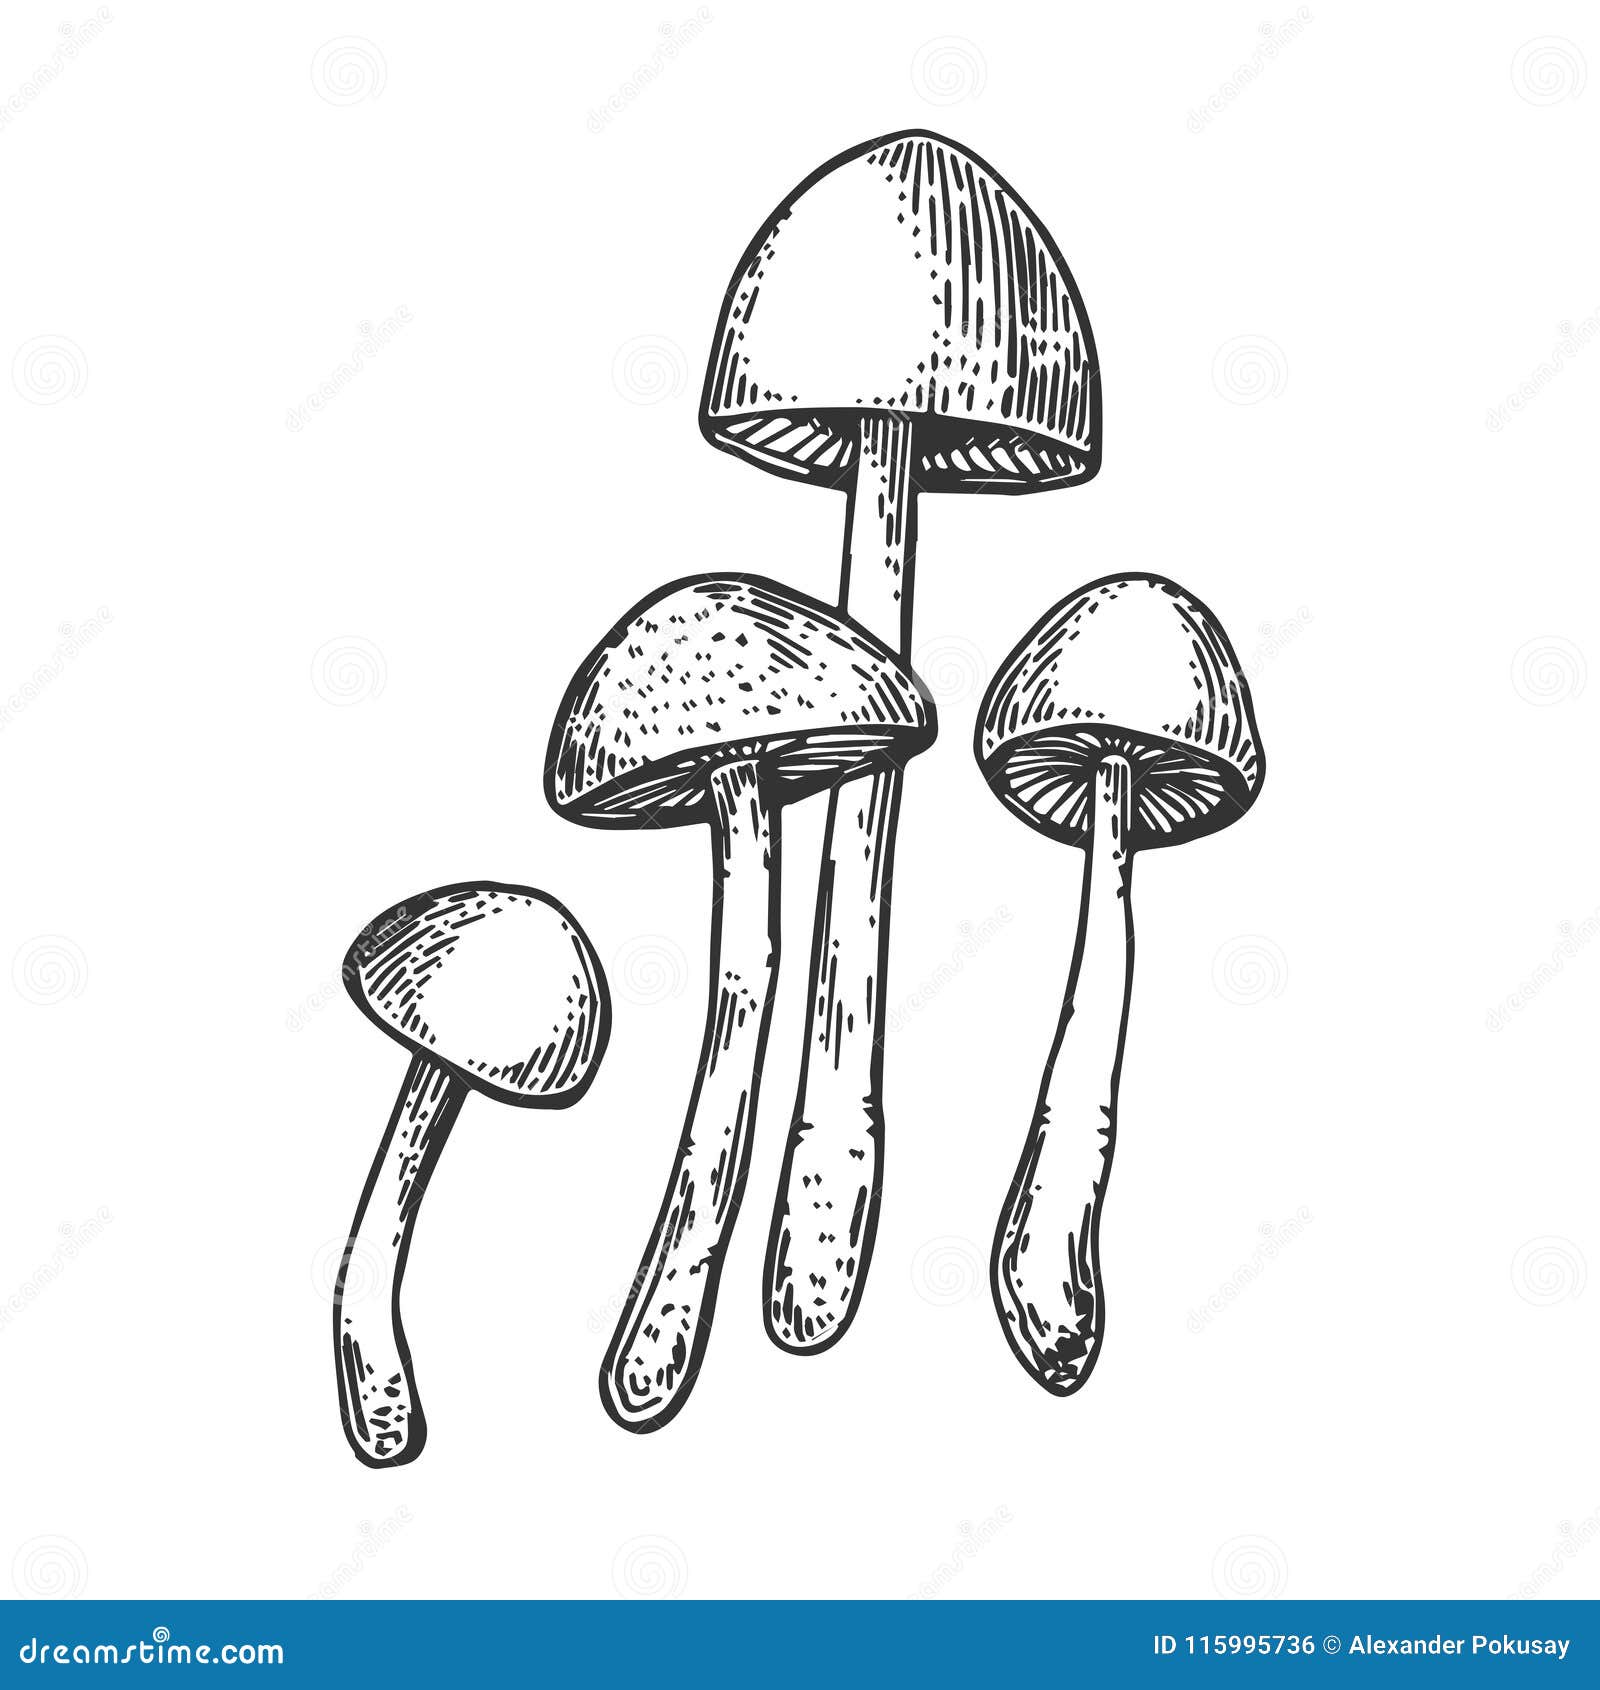 narcotic mushroom engraving  